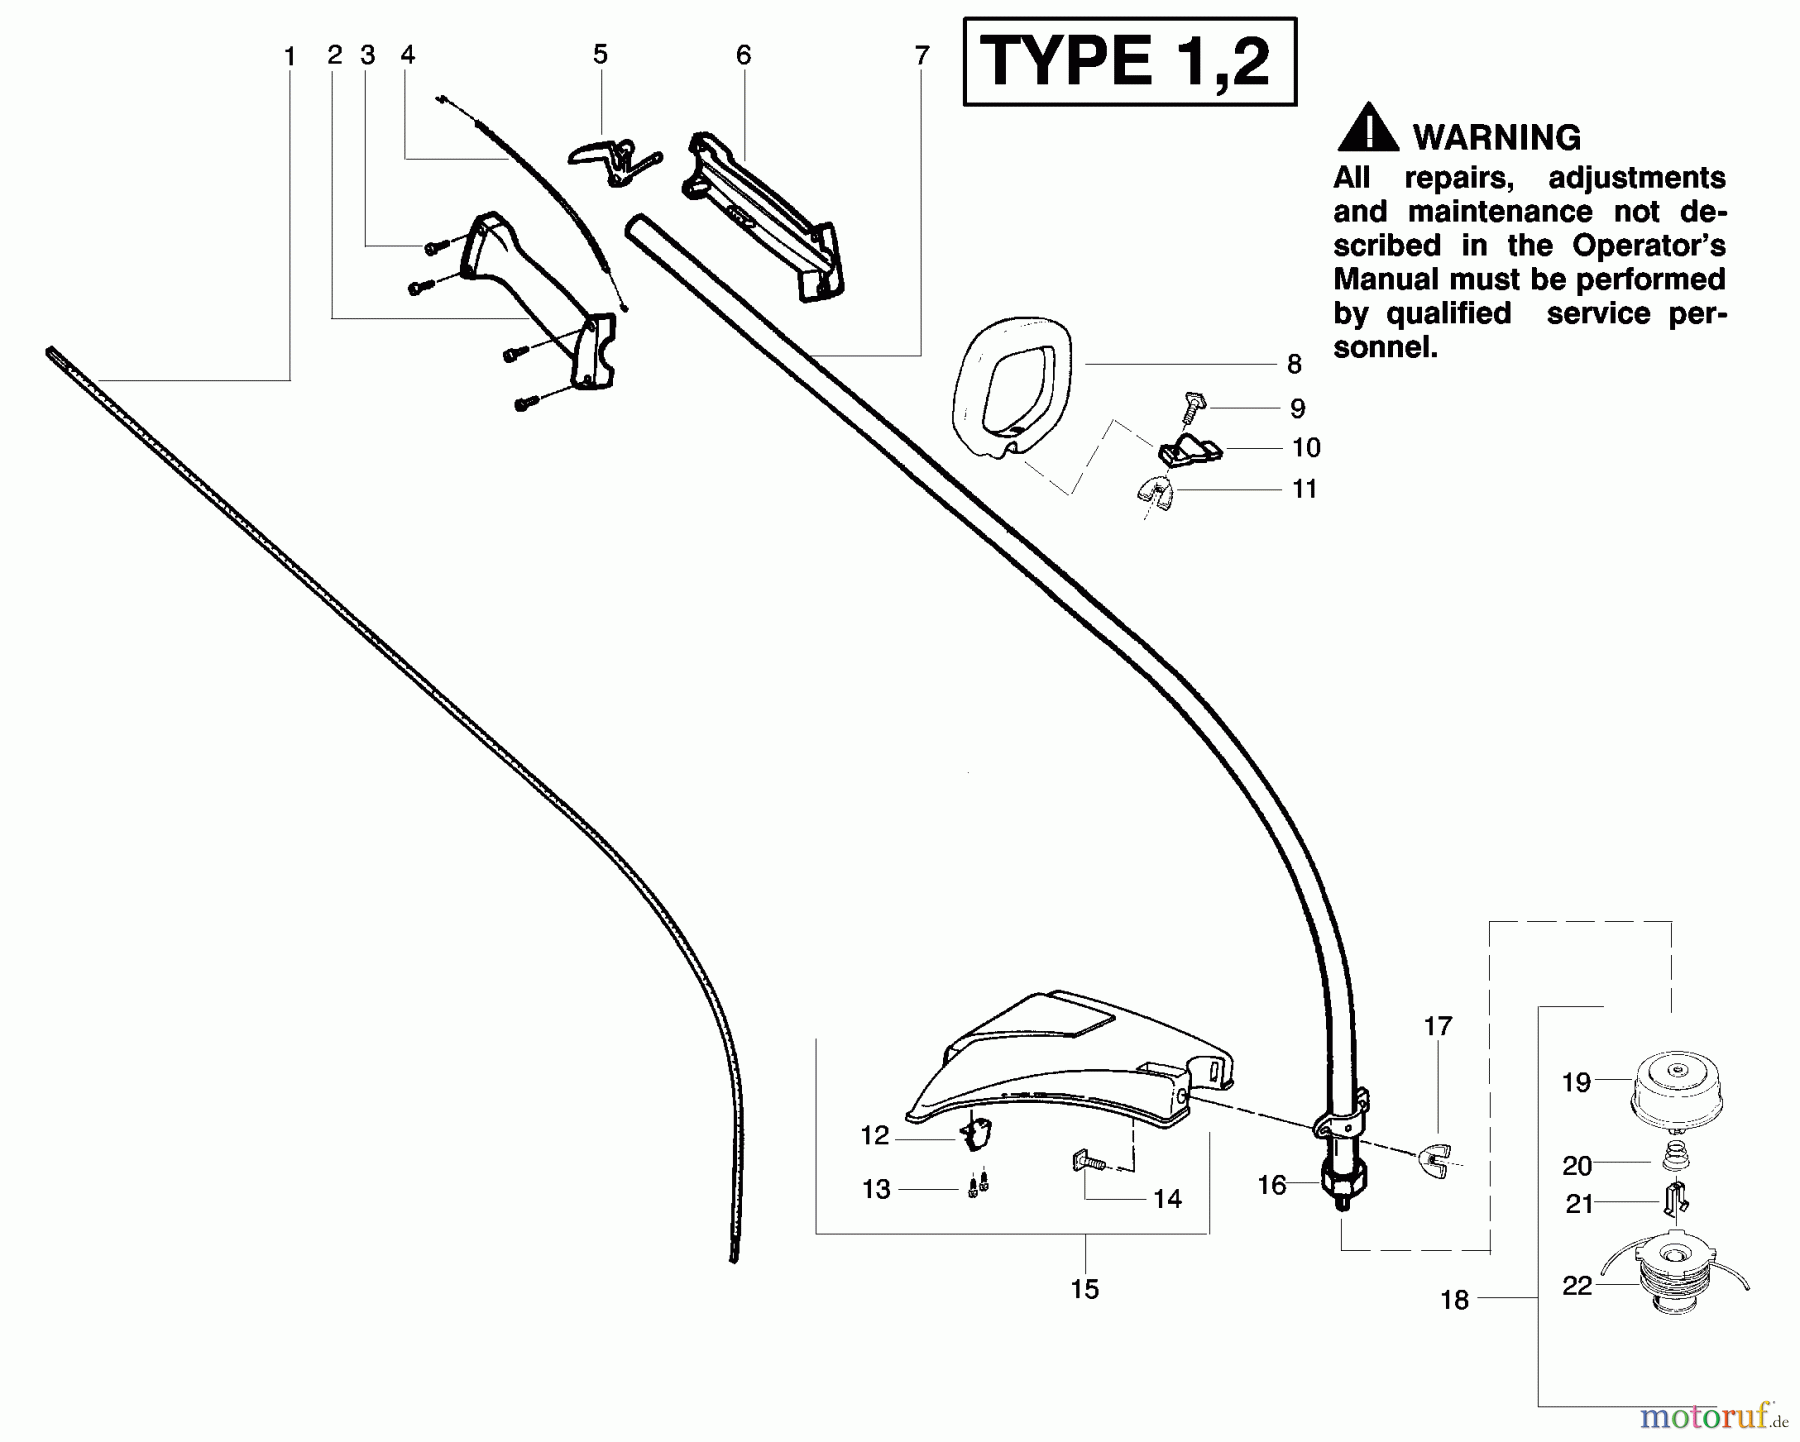  Poulan / Weed Eater Motorsensen, Trimmer XT250 (Type 2) - Weed Eater String Trimmer Handle & Shaft Assembly